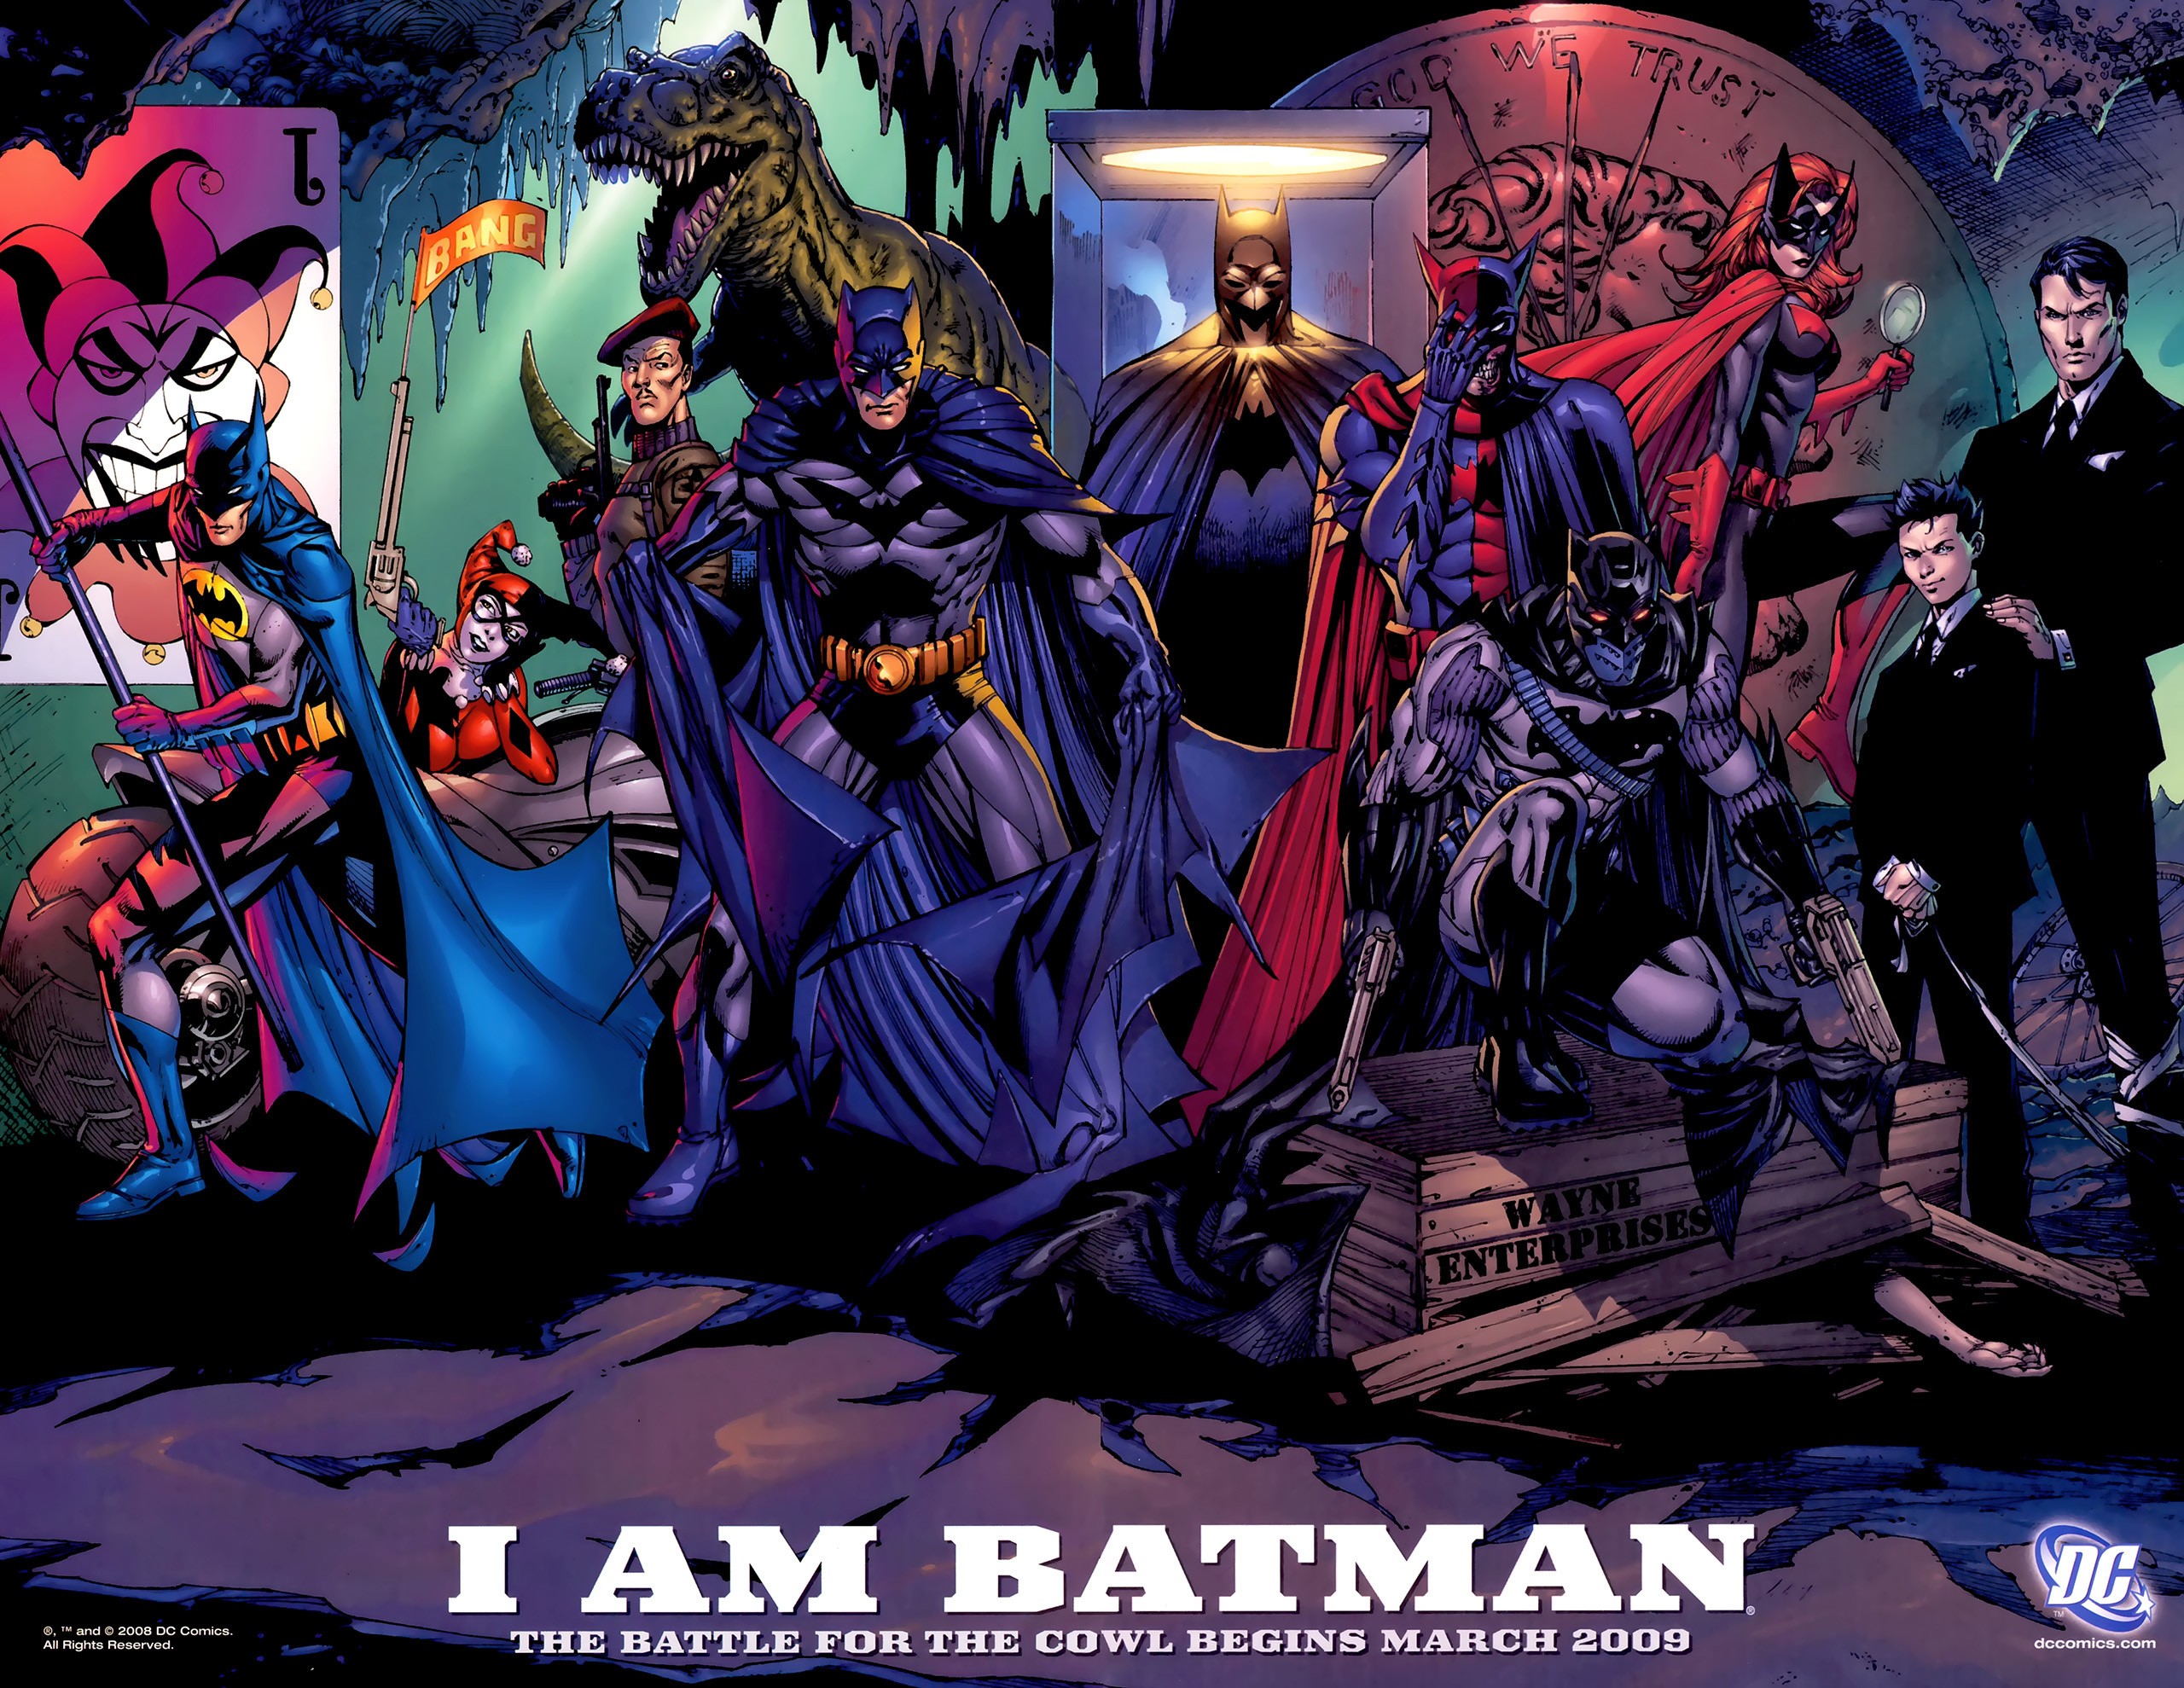 General 2560x1979 Batman Harley Quinn hero superhero comics artwork Batgirl Batwoman DC Comics comic art 2009 (Year)